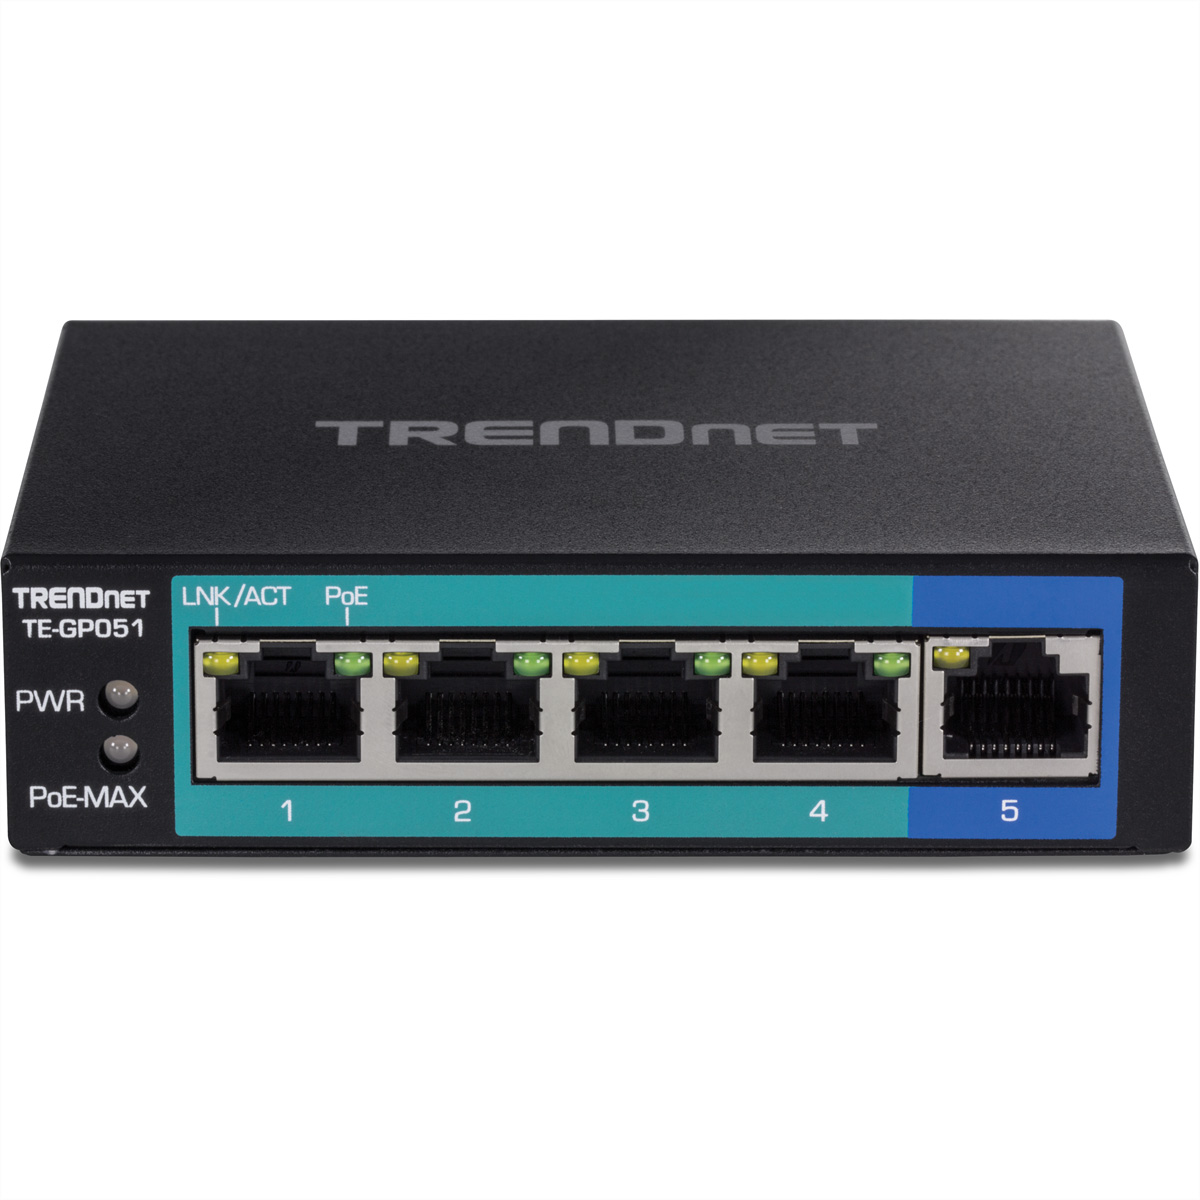 Switch TRENDNET PoE Switch 5-Port PoE+ Gigabit TE-GP051 Gigabit